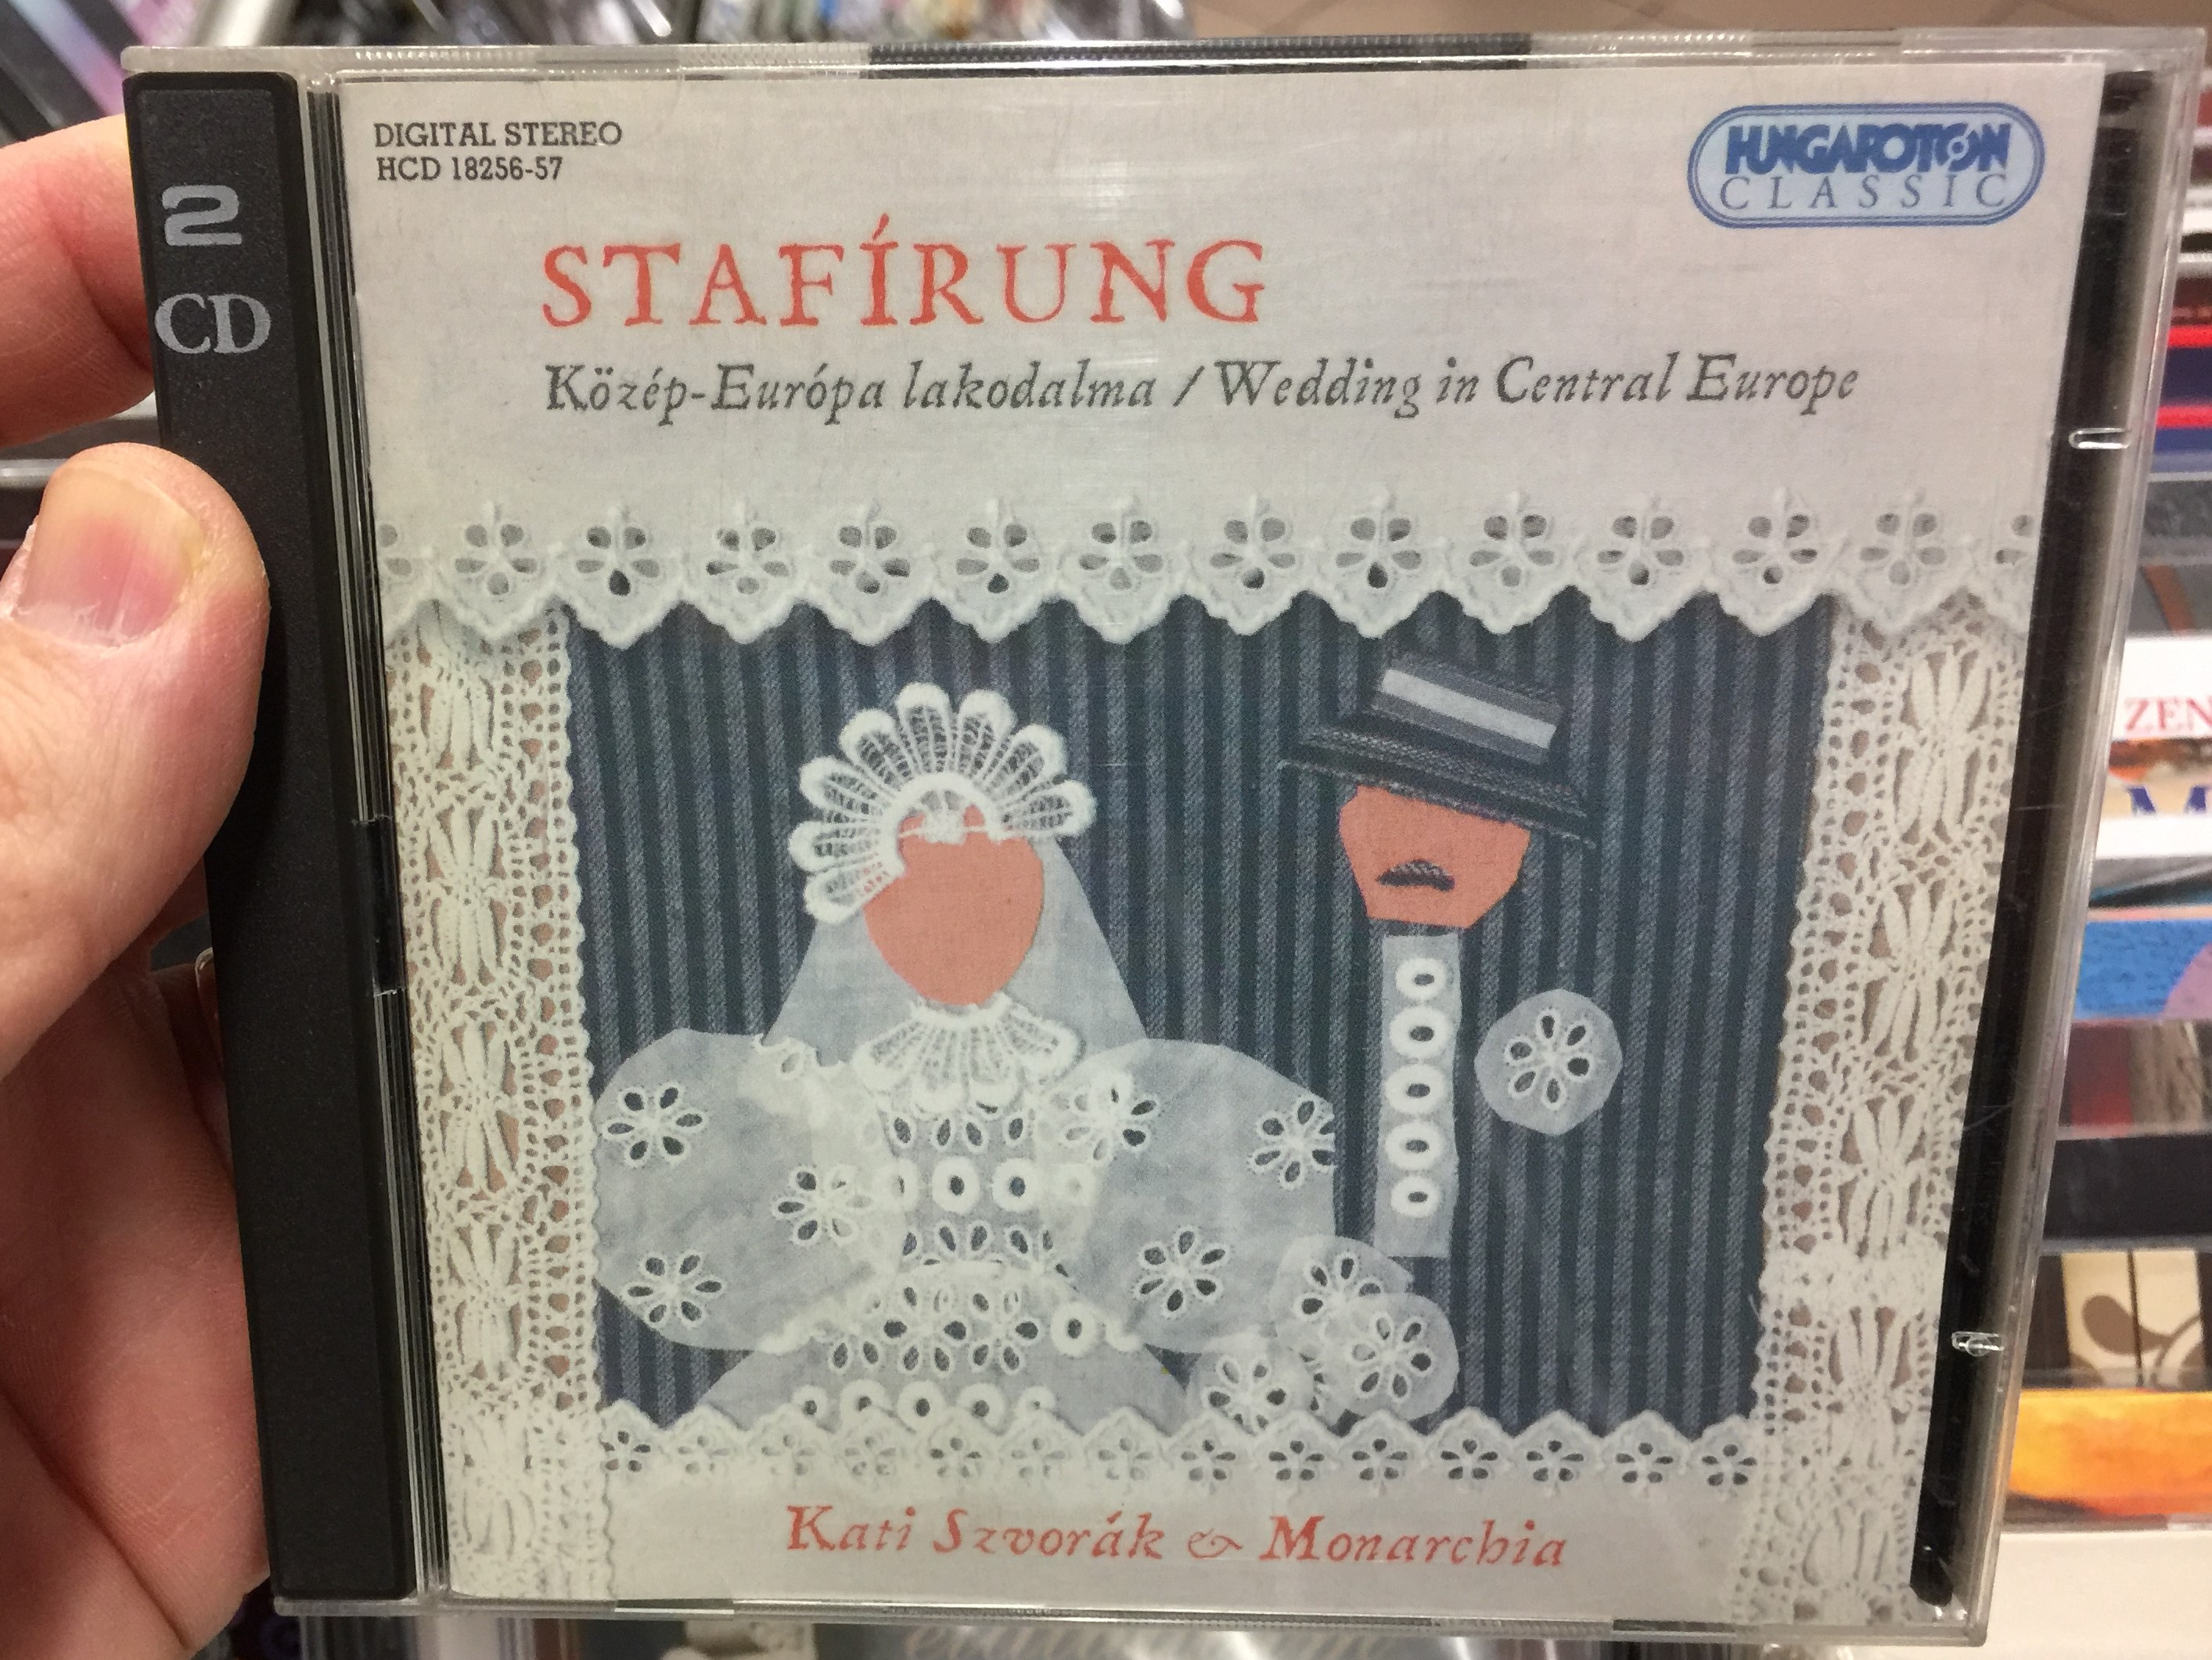 staf-rung-k-z-p-eur-pa-lakodalma-wedding-in-centraul-europe-kati-szvor-k-monarchia-hungaroton-classic-2x-audio-cd-2002-stereo-hcd-18256-57-1-.jpg